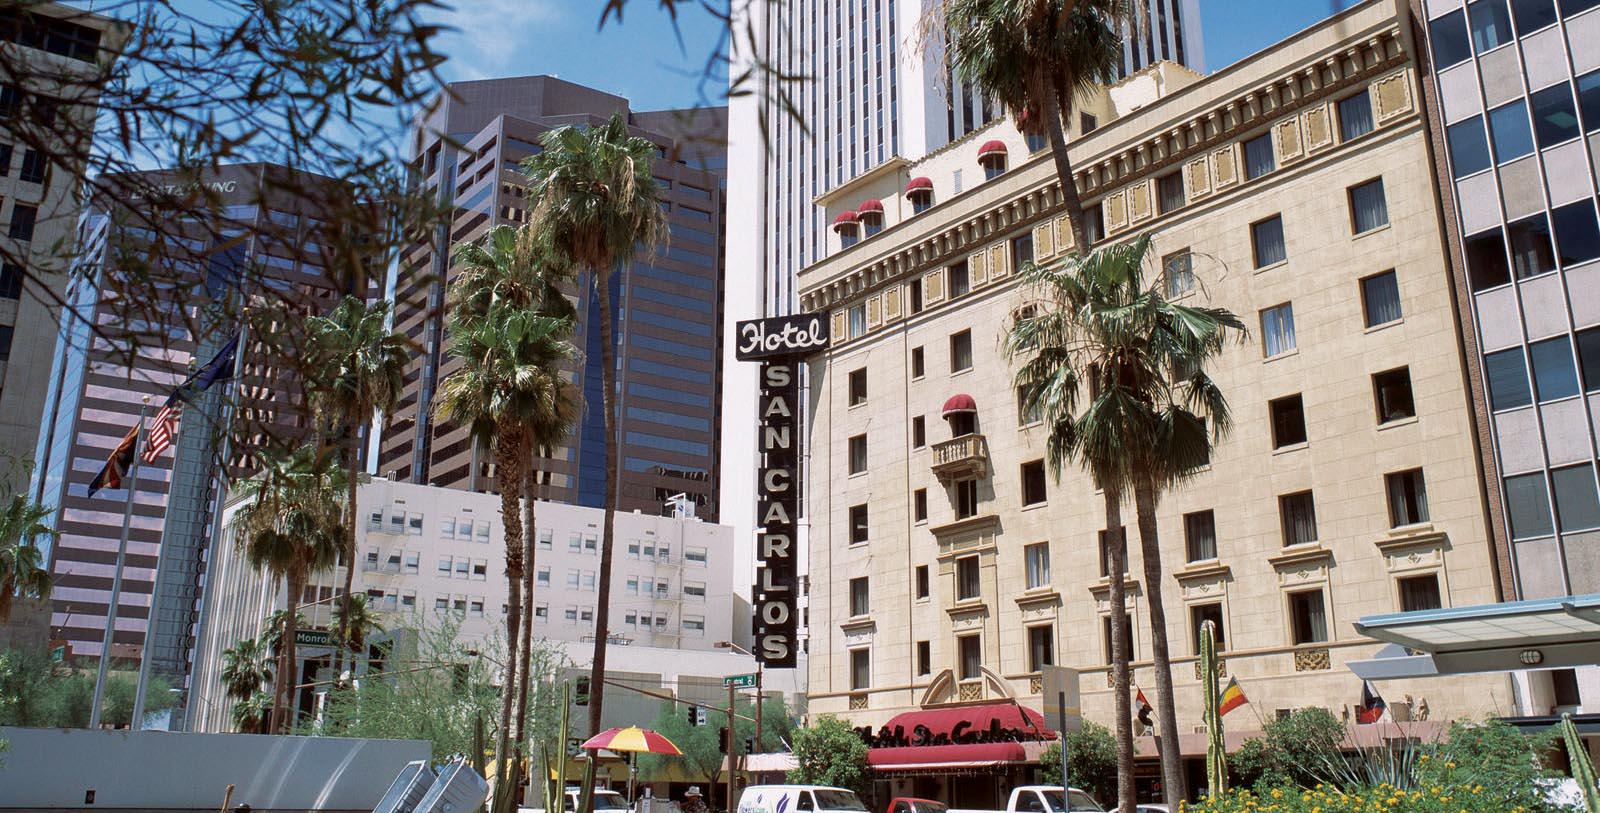 Image of Lobby Seating, Hotel San Carlos in Phoenix Arizona, 1928, Member of Historic Hotels of America, Experience